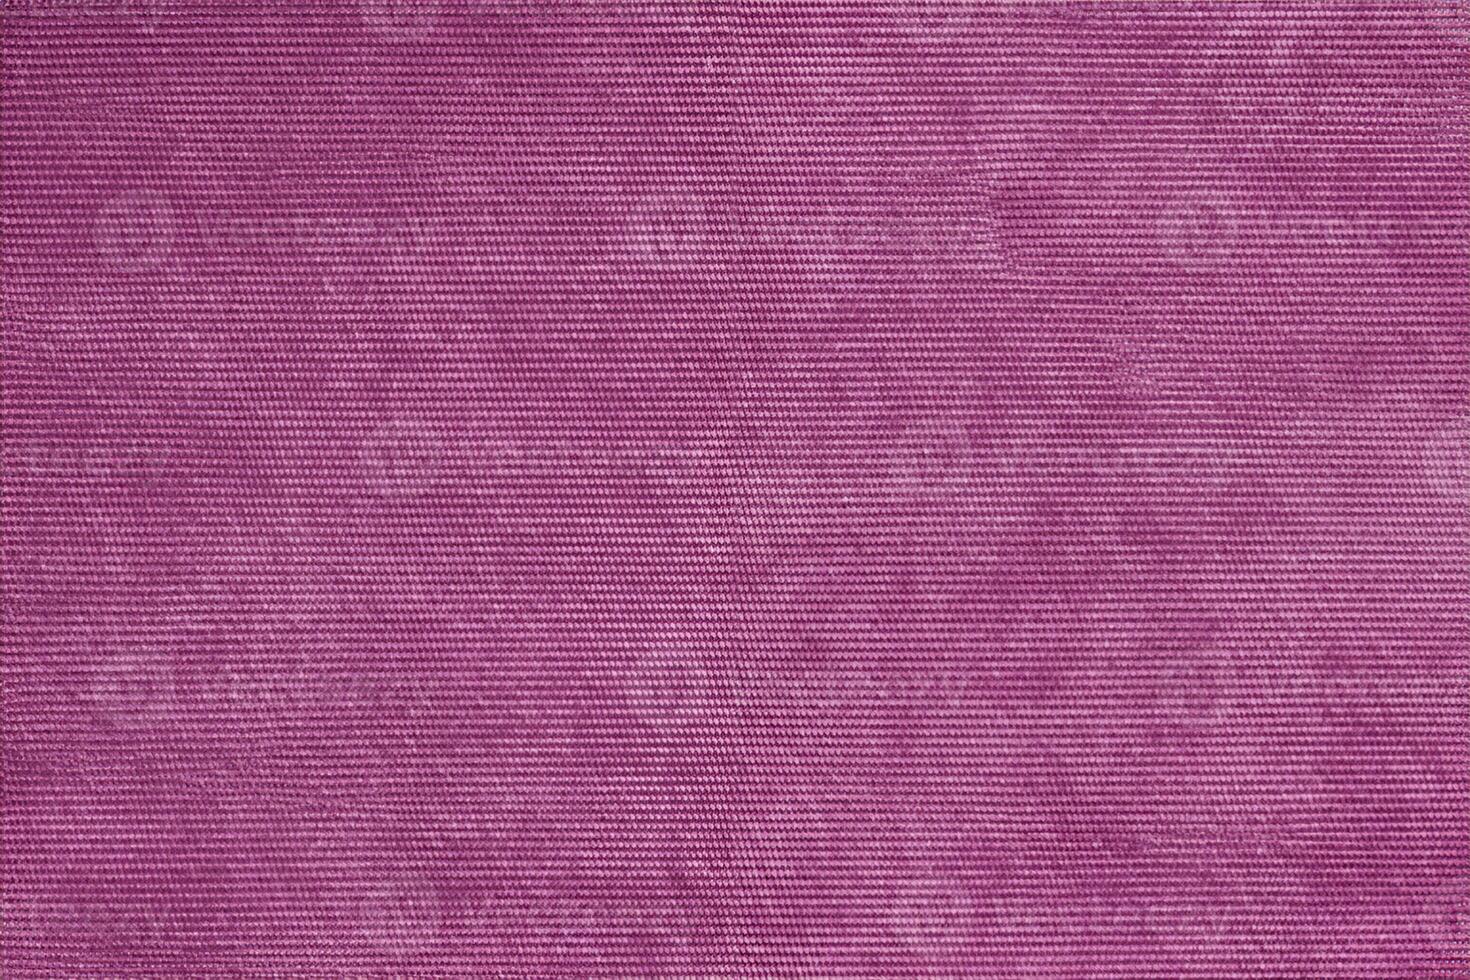 Pink Velveteen Upholstery Fabric Texture photo